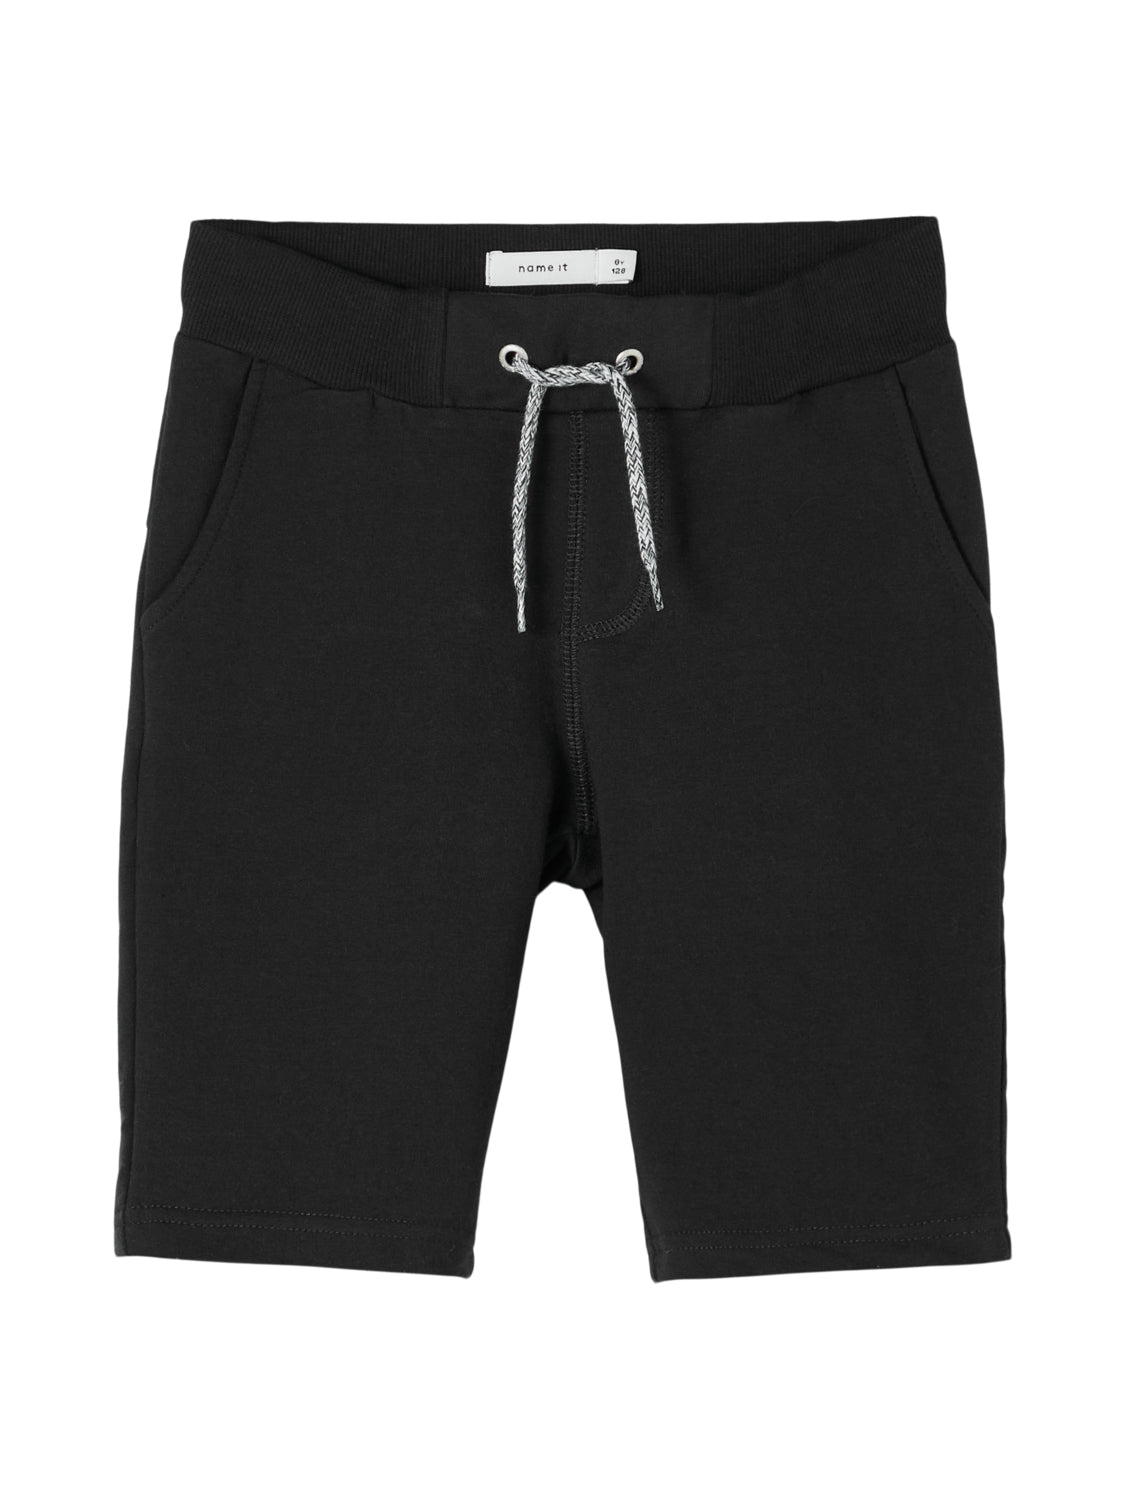 NKMHONK Shorts - Black